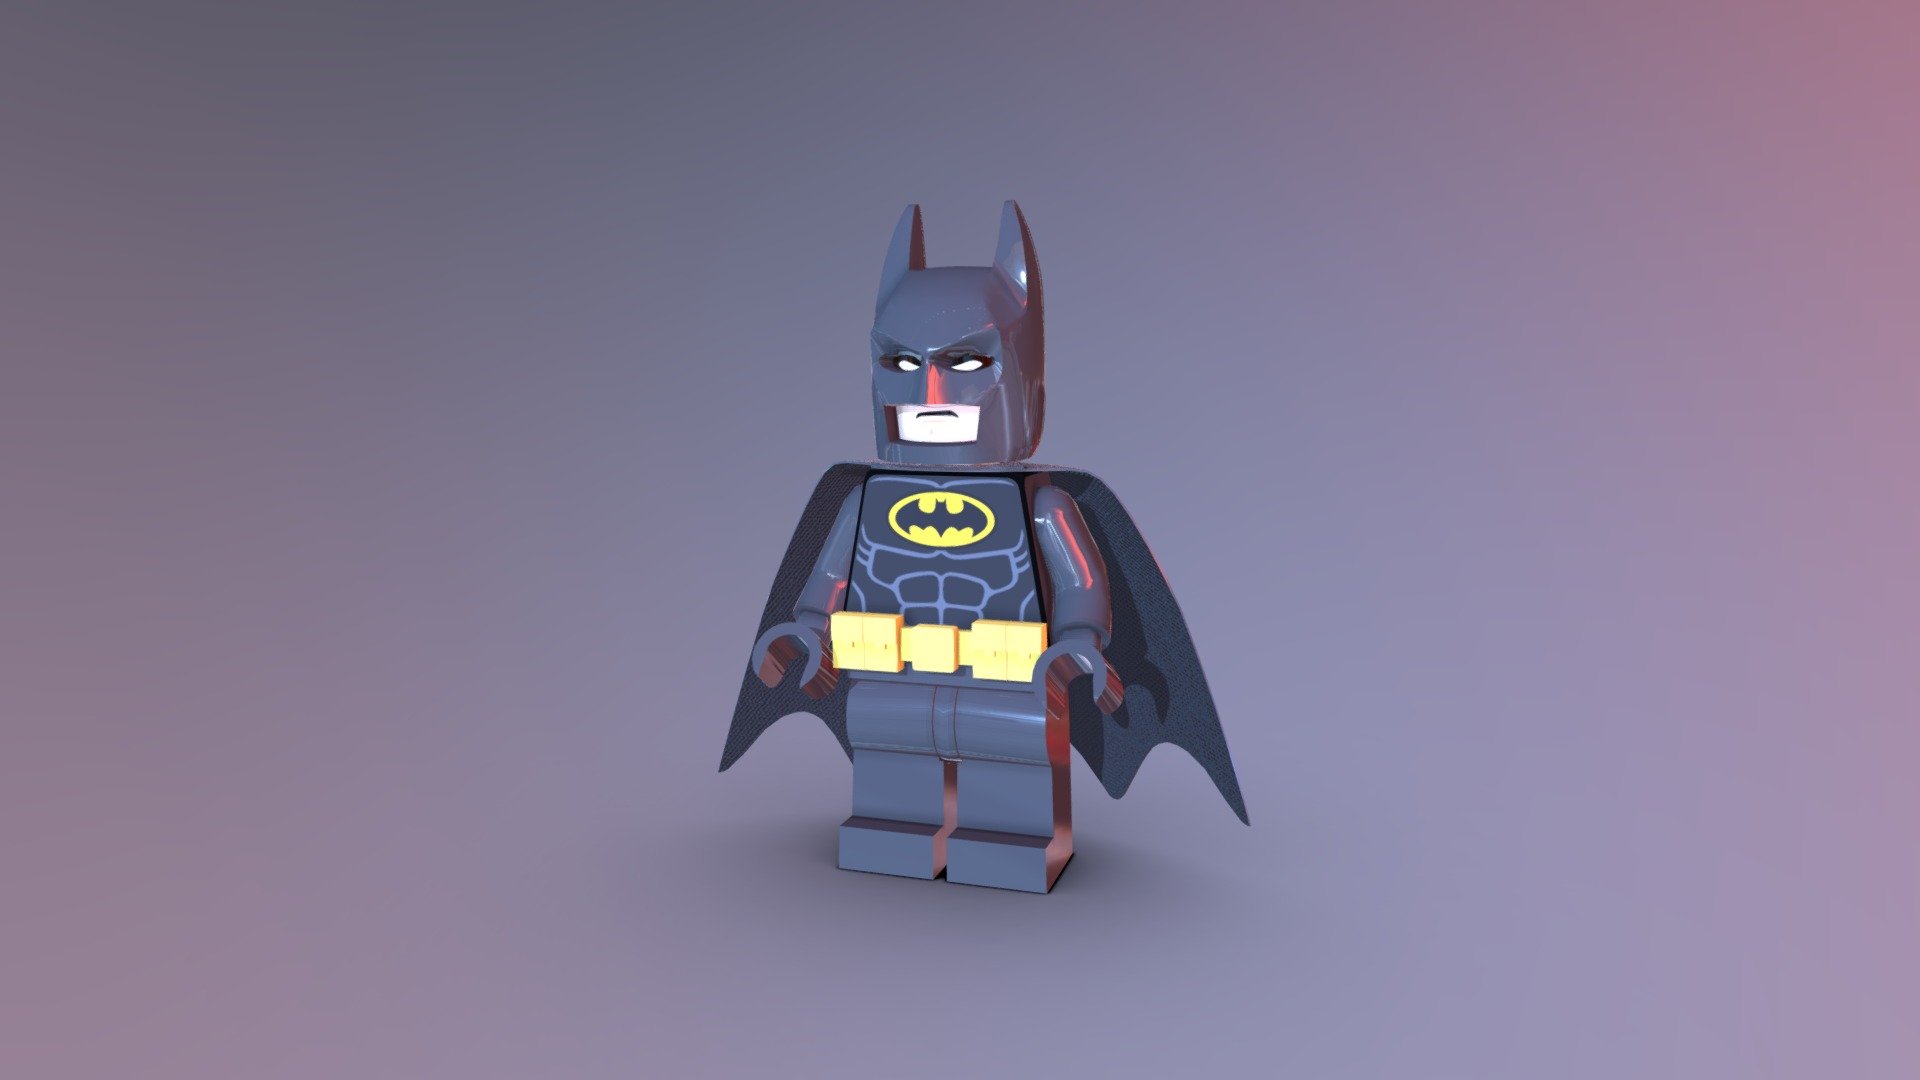 Batman Lego 3D Model,
Comment which LEGO model I should upload next! :D - Lego Batman 3D Model ( From The Lego Batman) - Download Free 3D model by Lego Mania (@dankmememe) 3d model